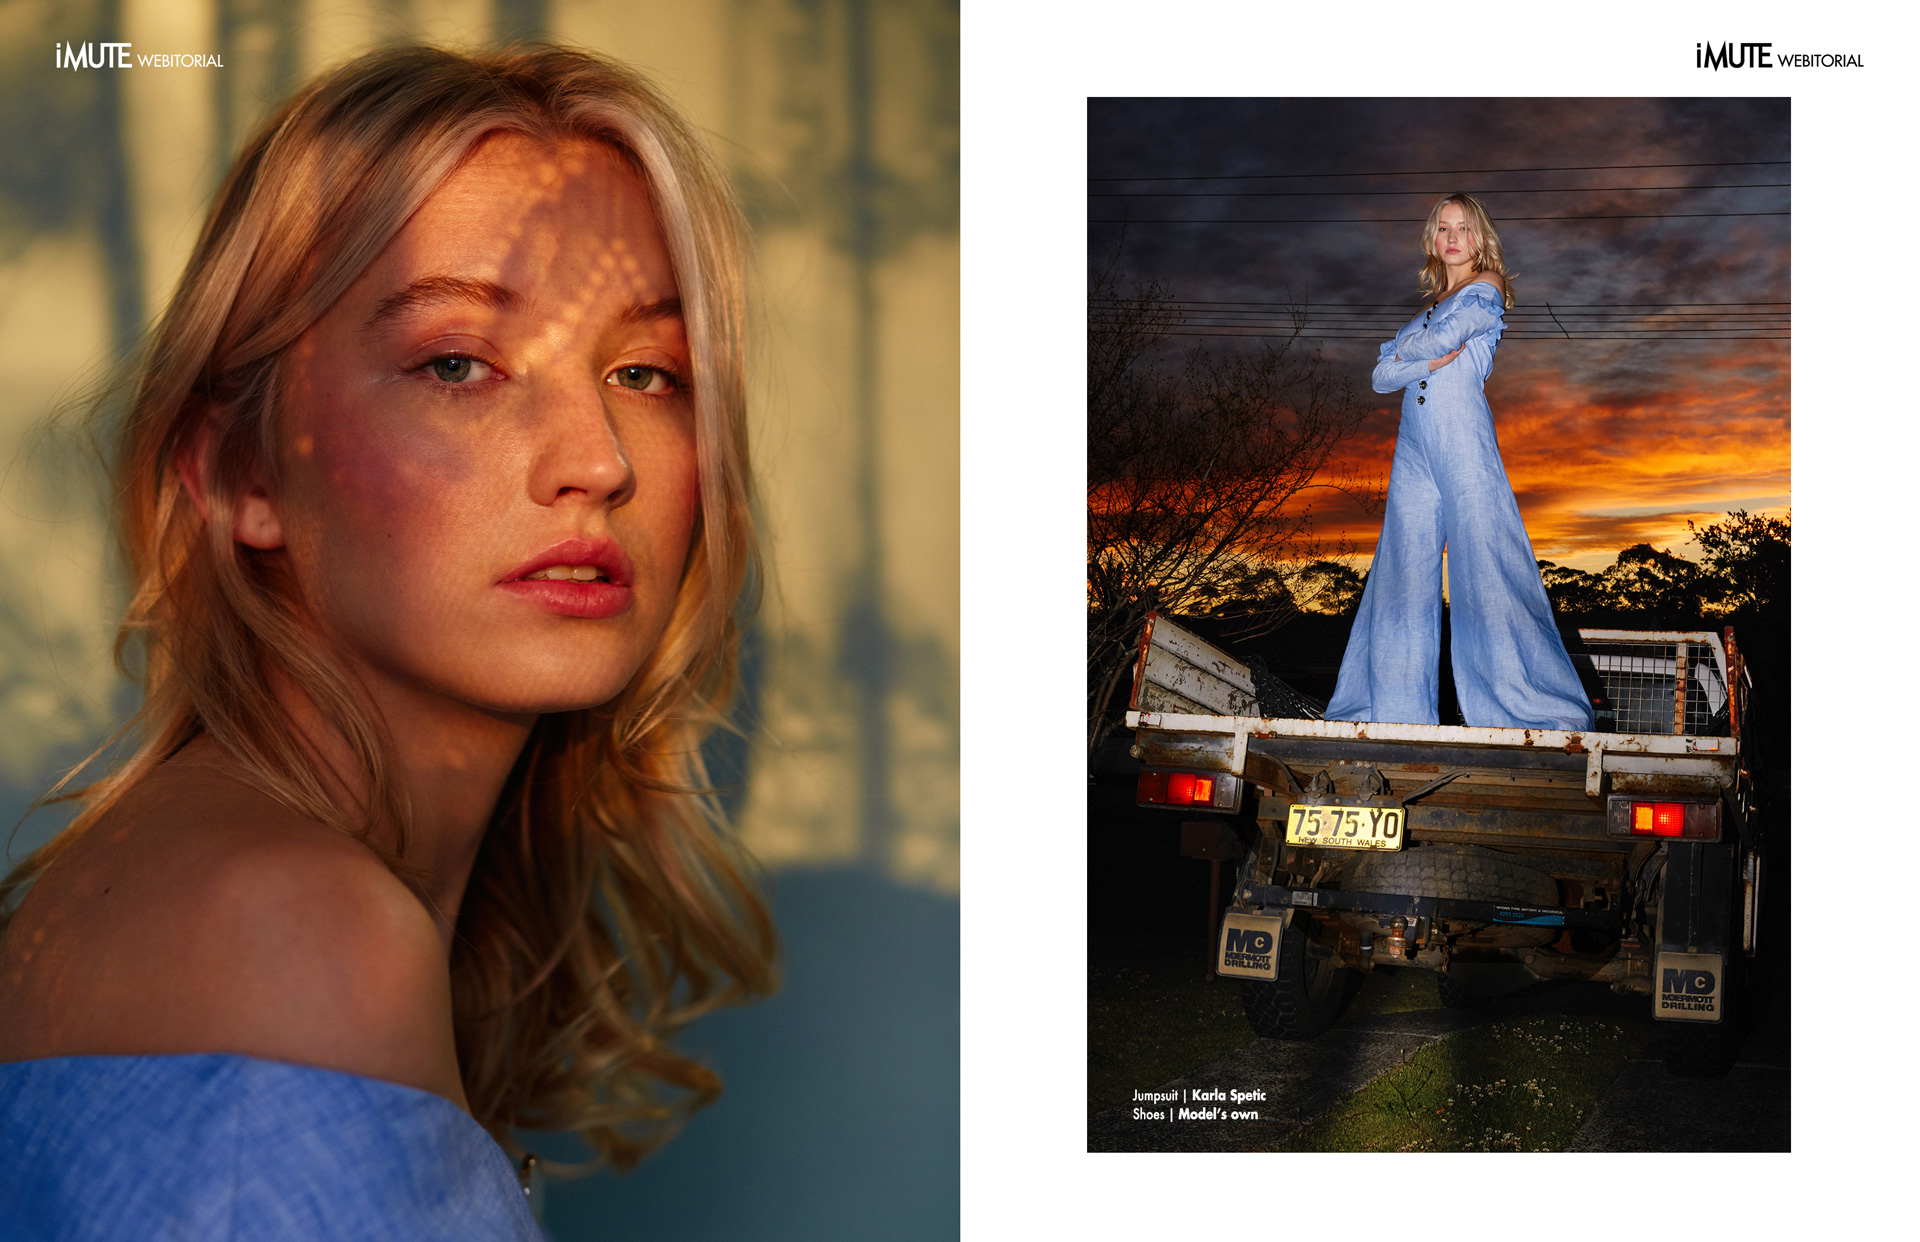 Tia webitorial for iMute Magazine Photographer | Vladimir Kravchenko Model | Tia @ Chadwick Models Stylist | Karla Spetic Makeup & Hair | Amelia Fell